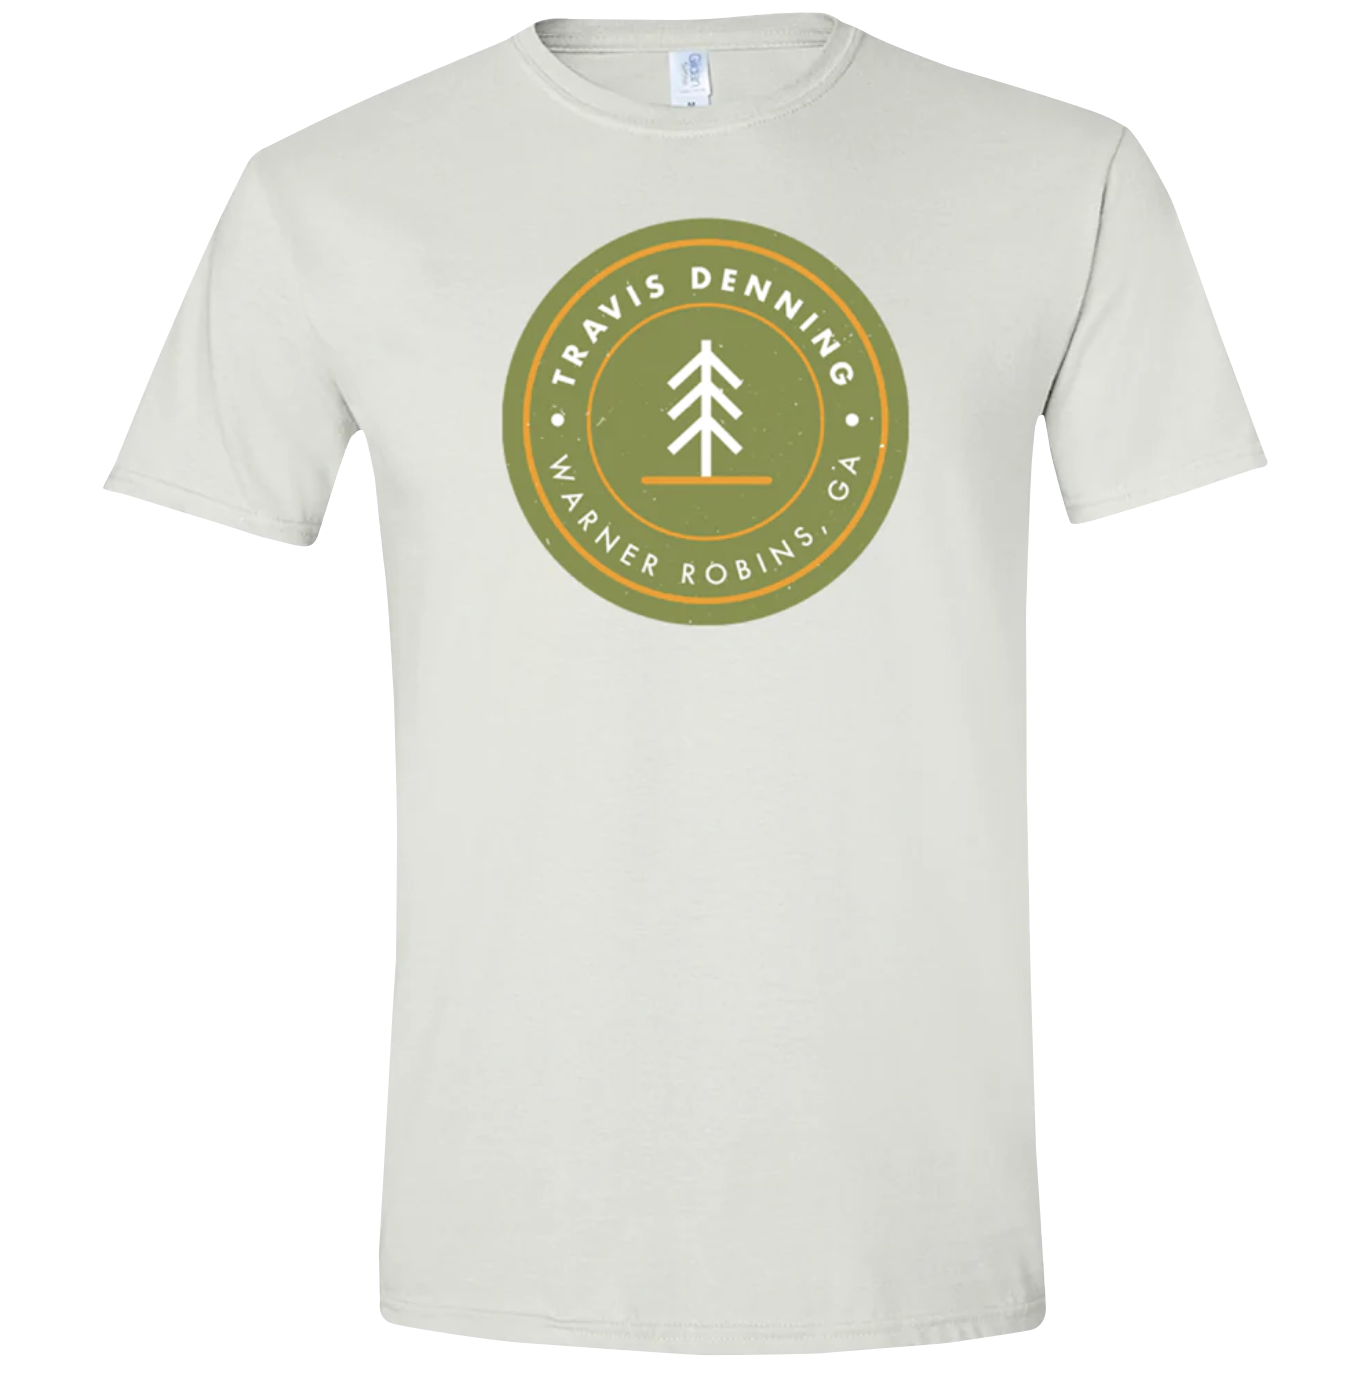 Warner Robins Tree T-Shirt